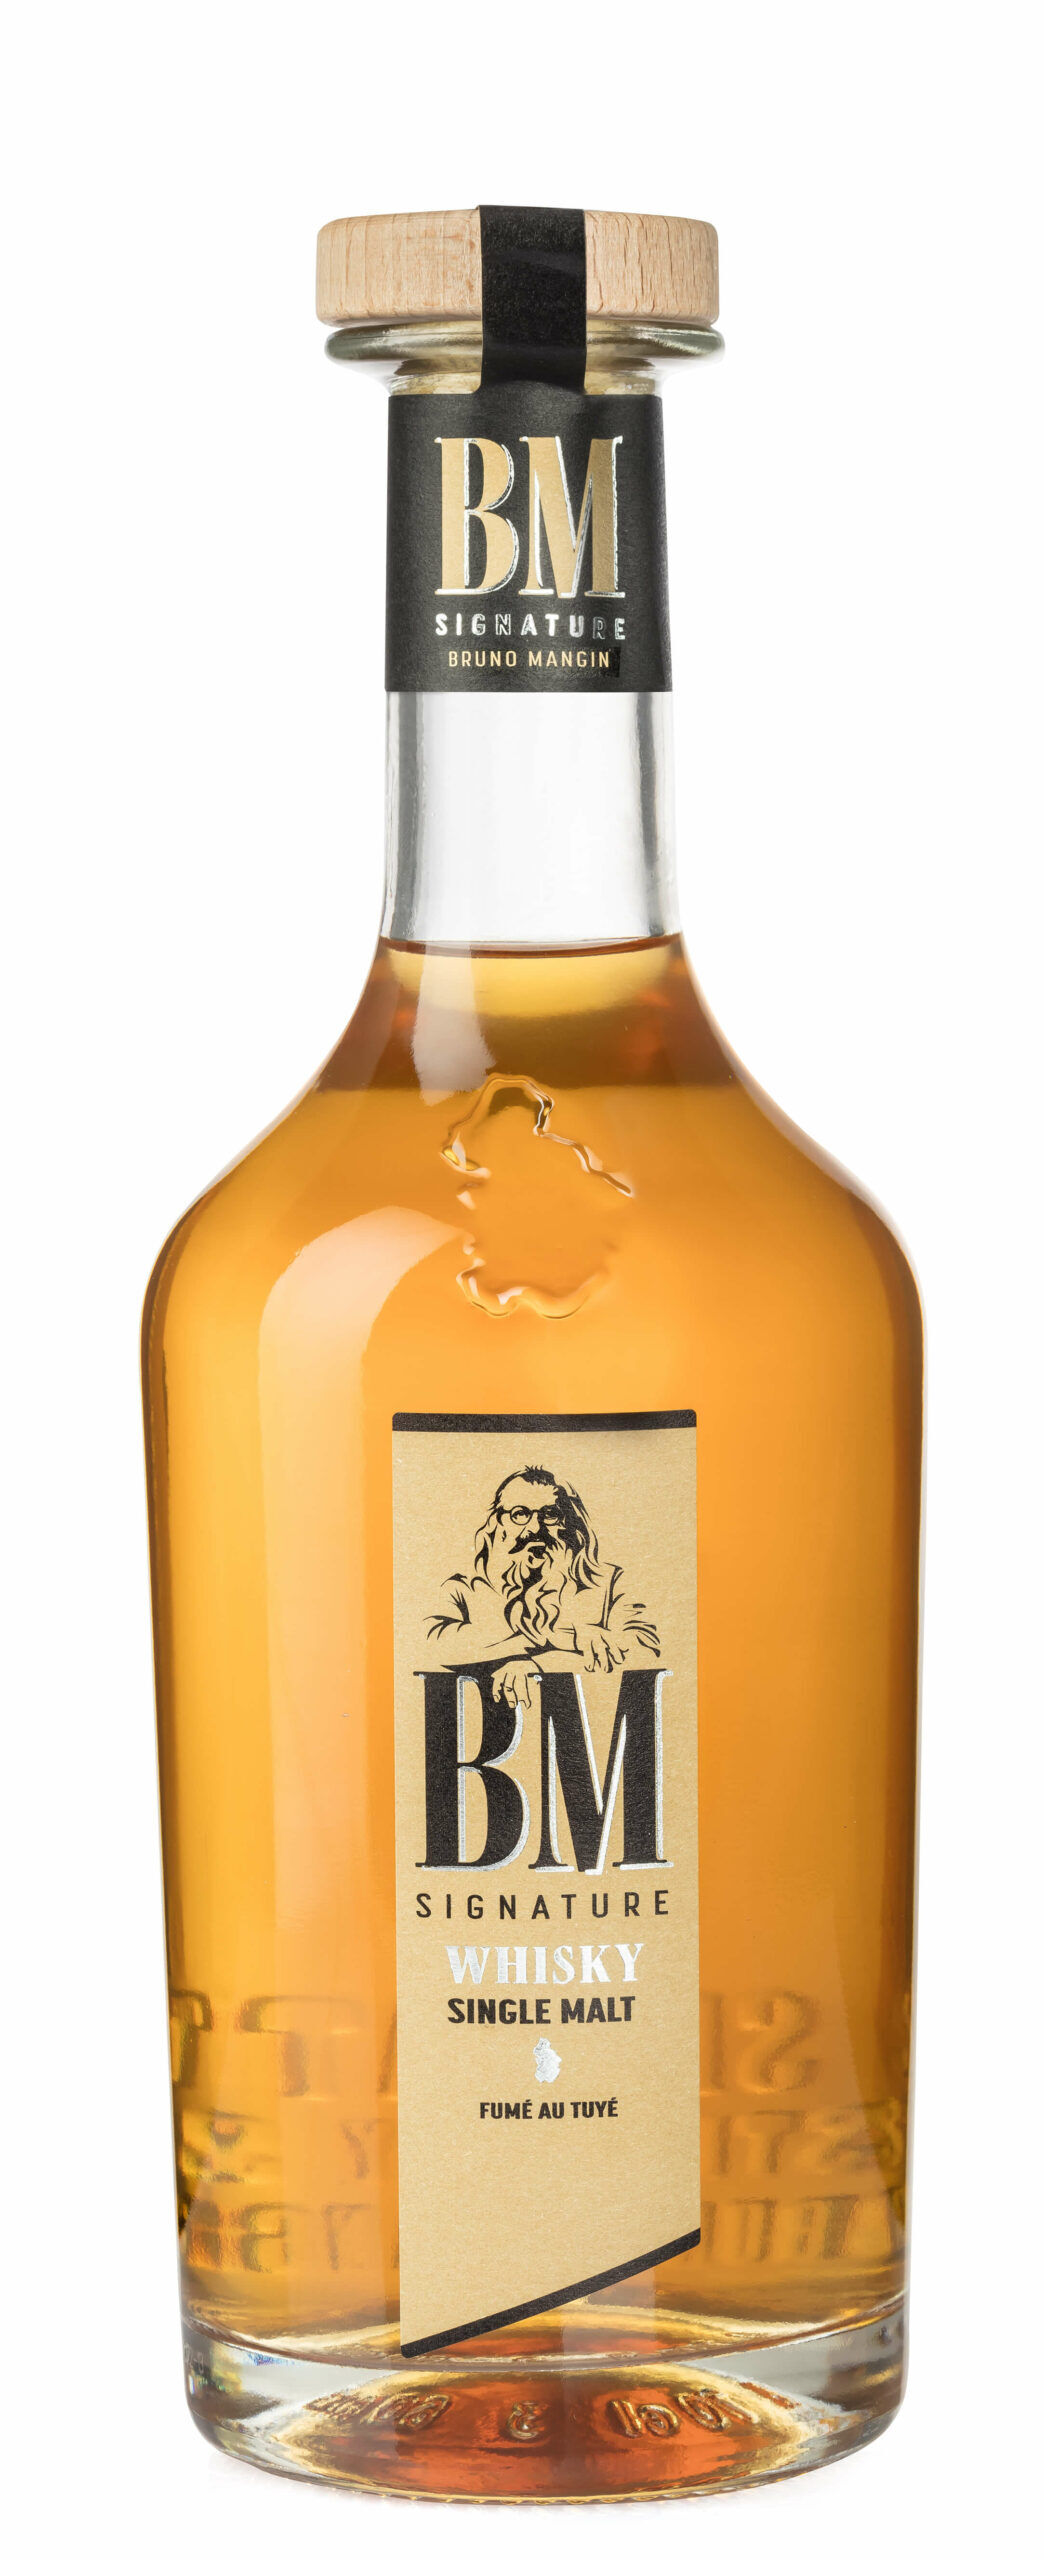 BM Signature, whisky single malt fumé au tuyé 42%